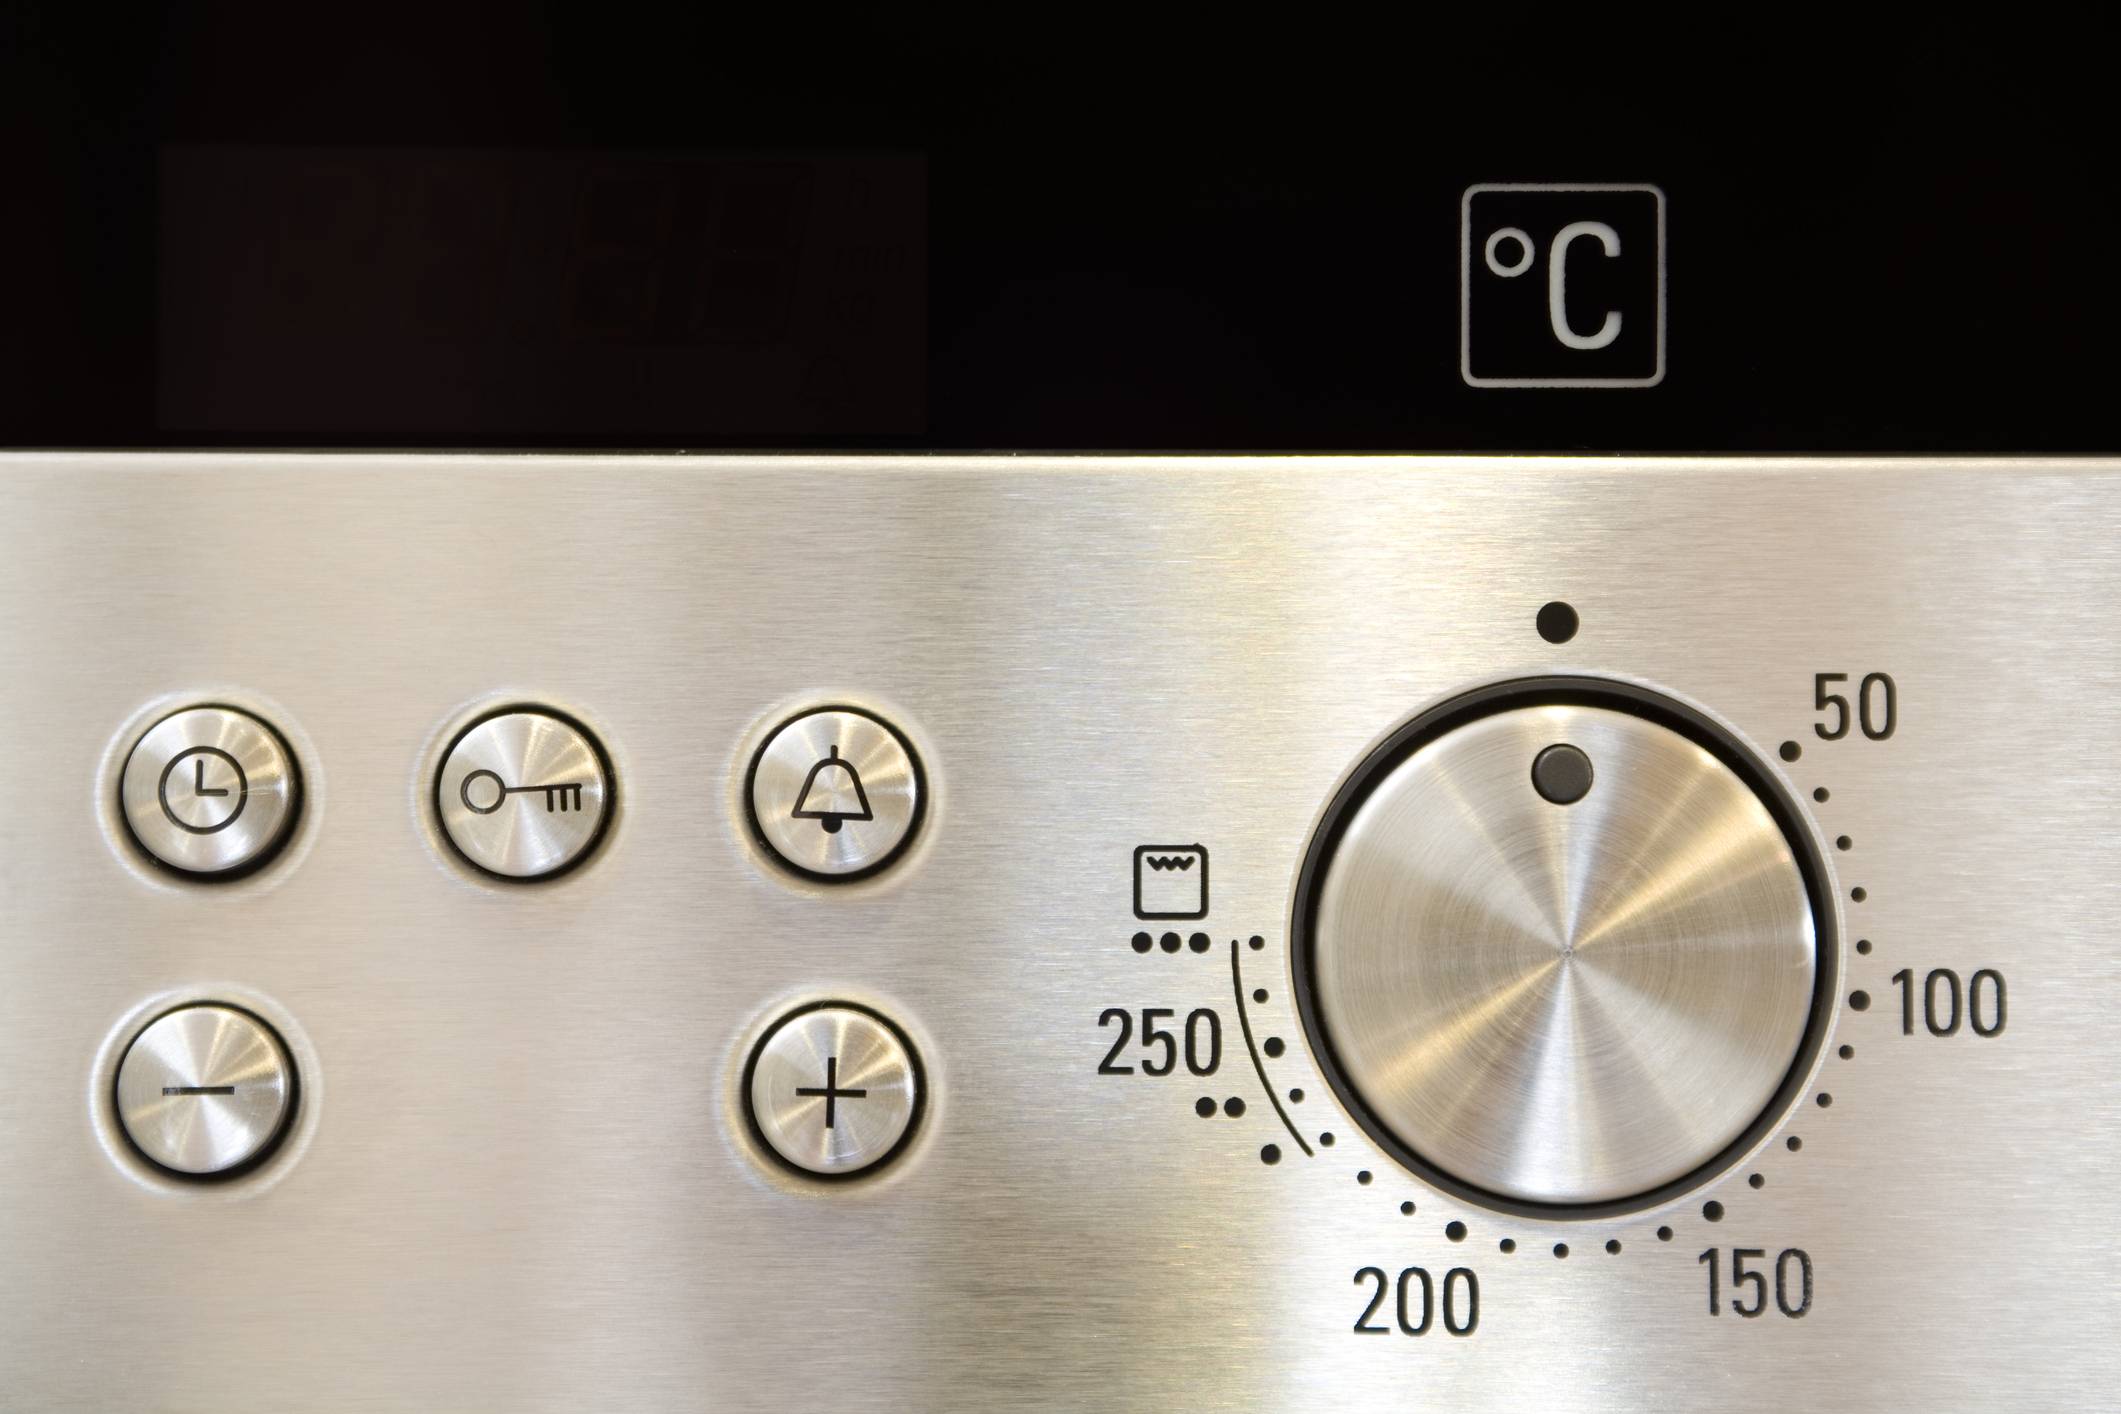 printed metal oven control panel